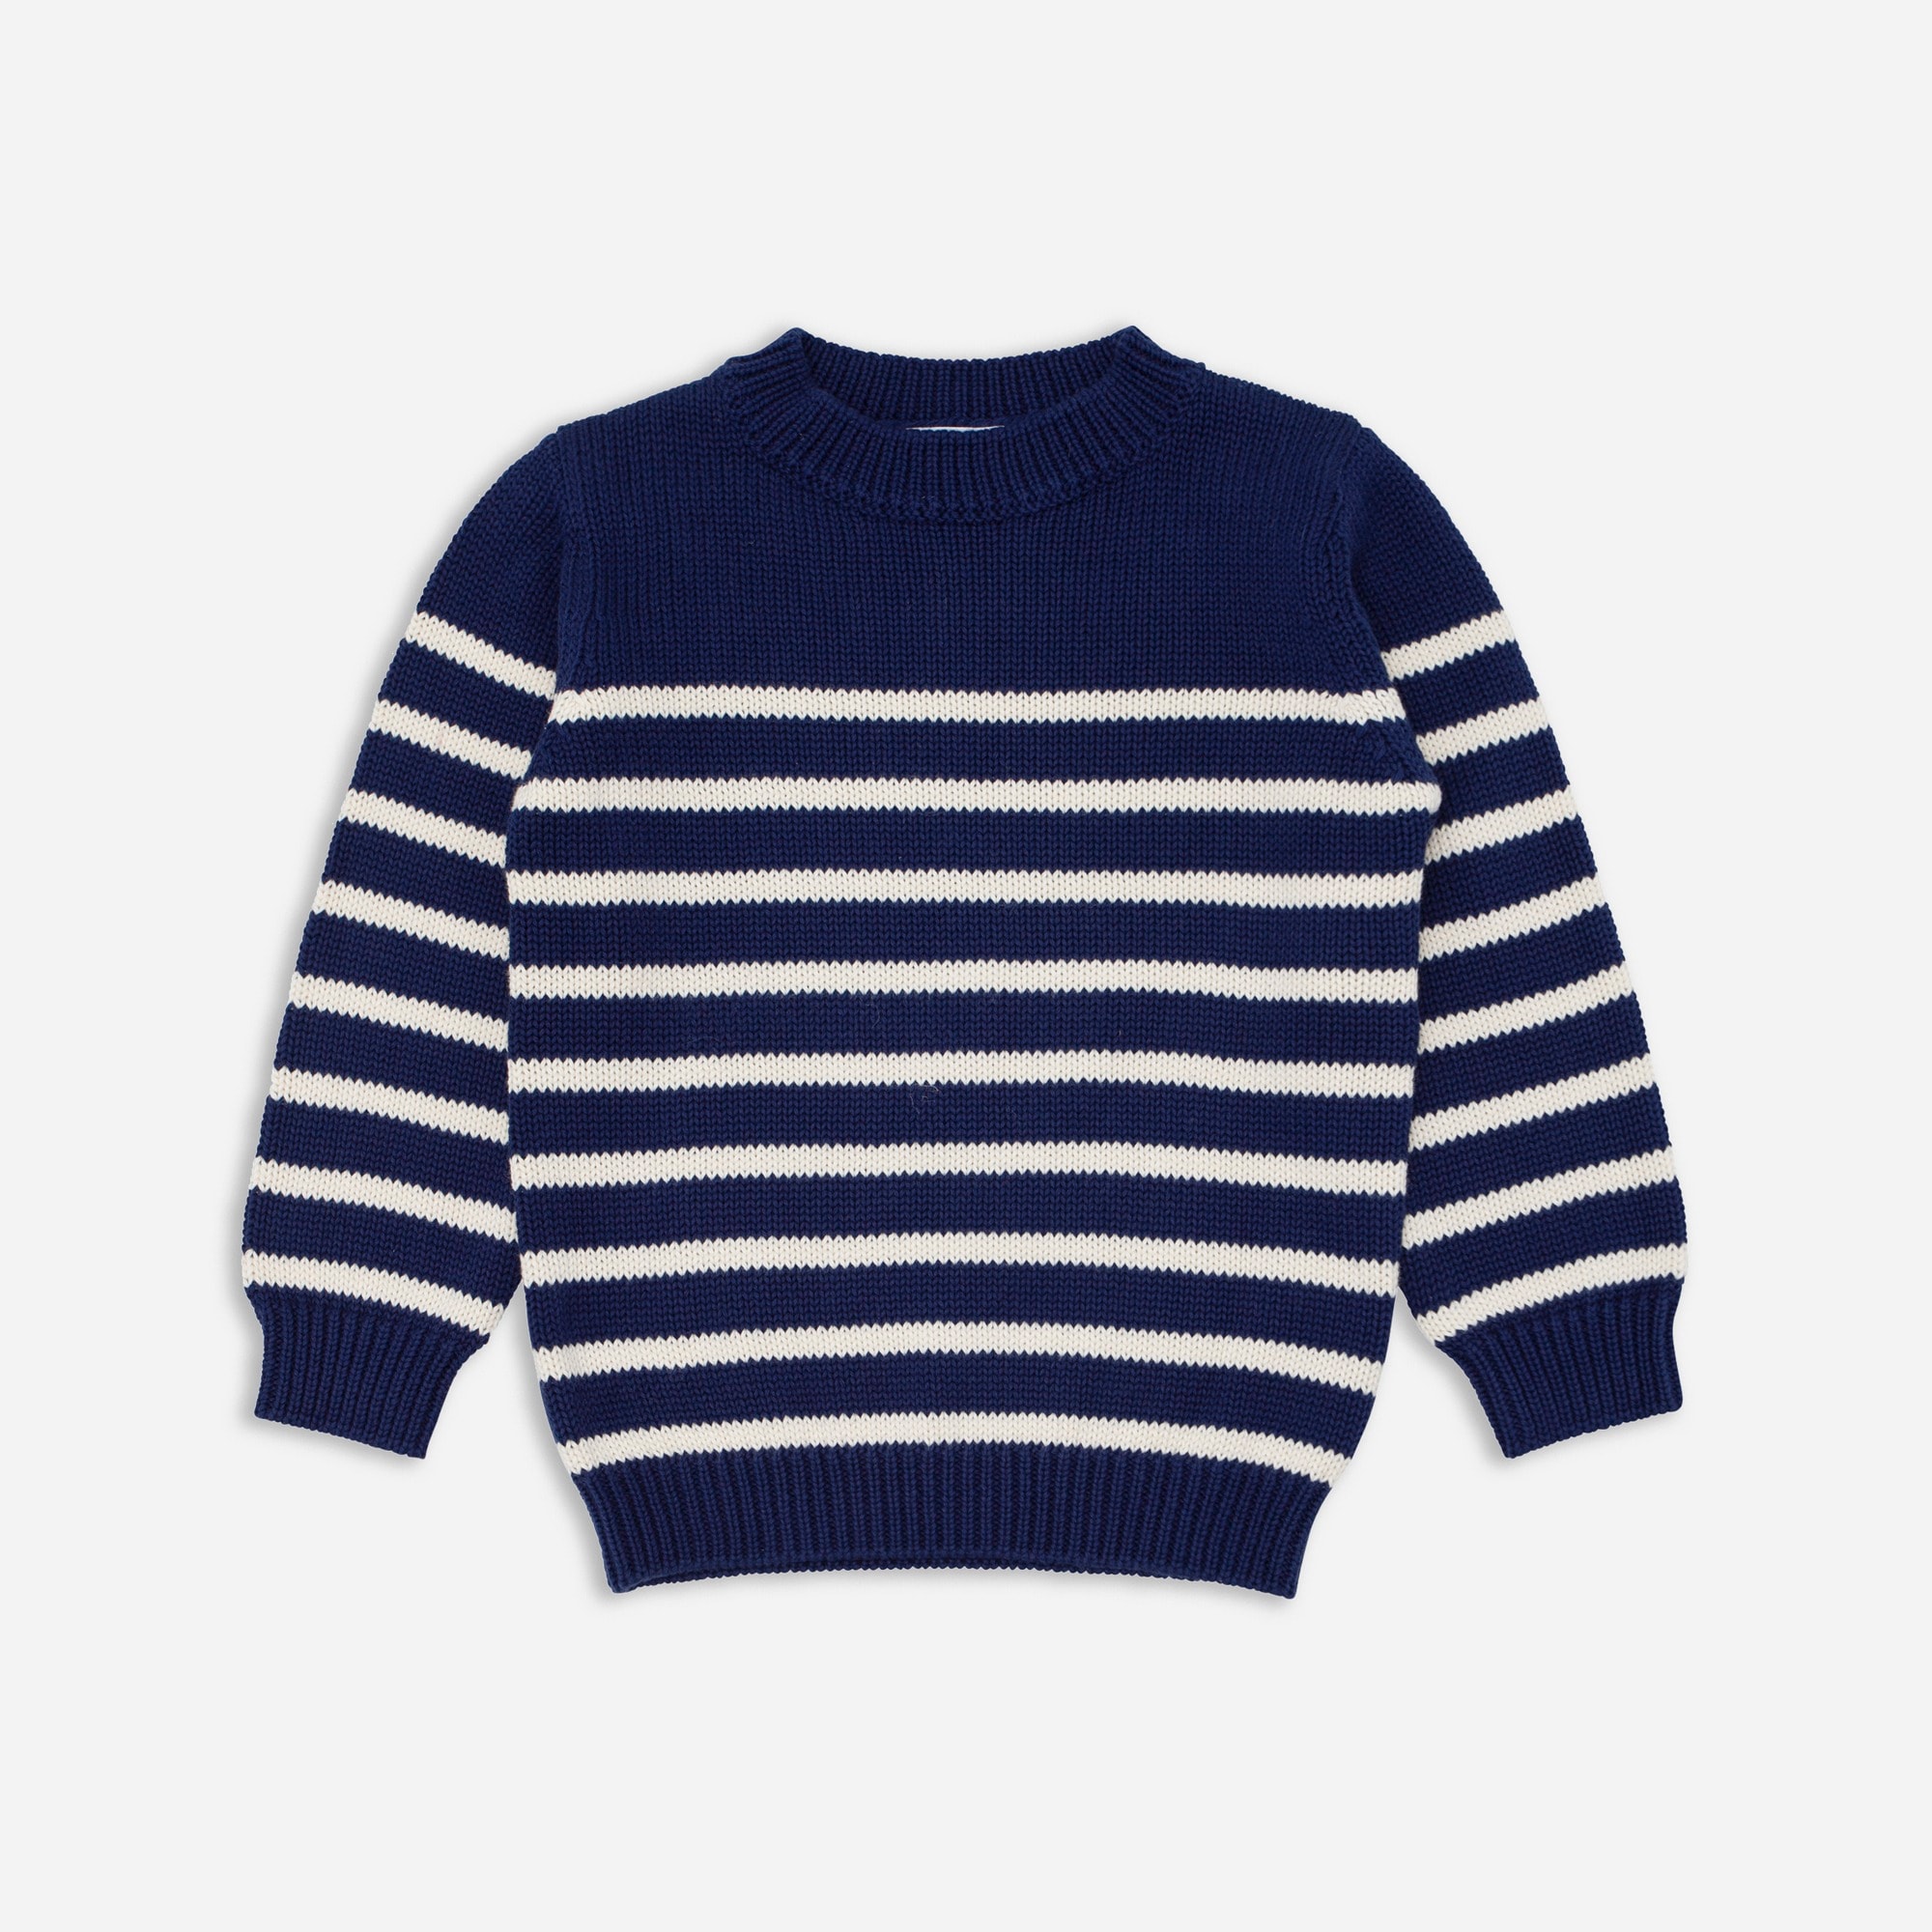 Jcrew Kidsu0026apos; minnowu0026trade; striped knit sweater